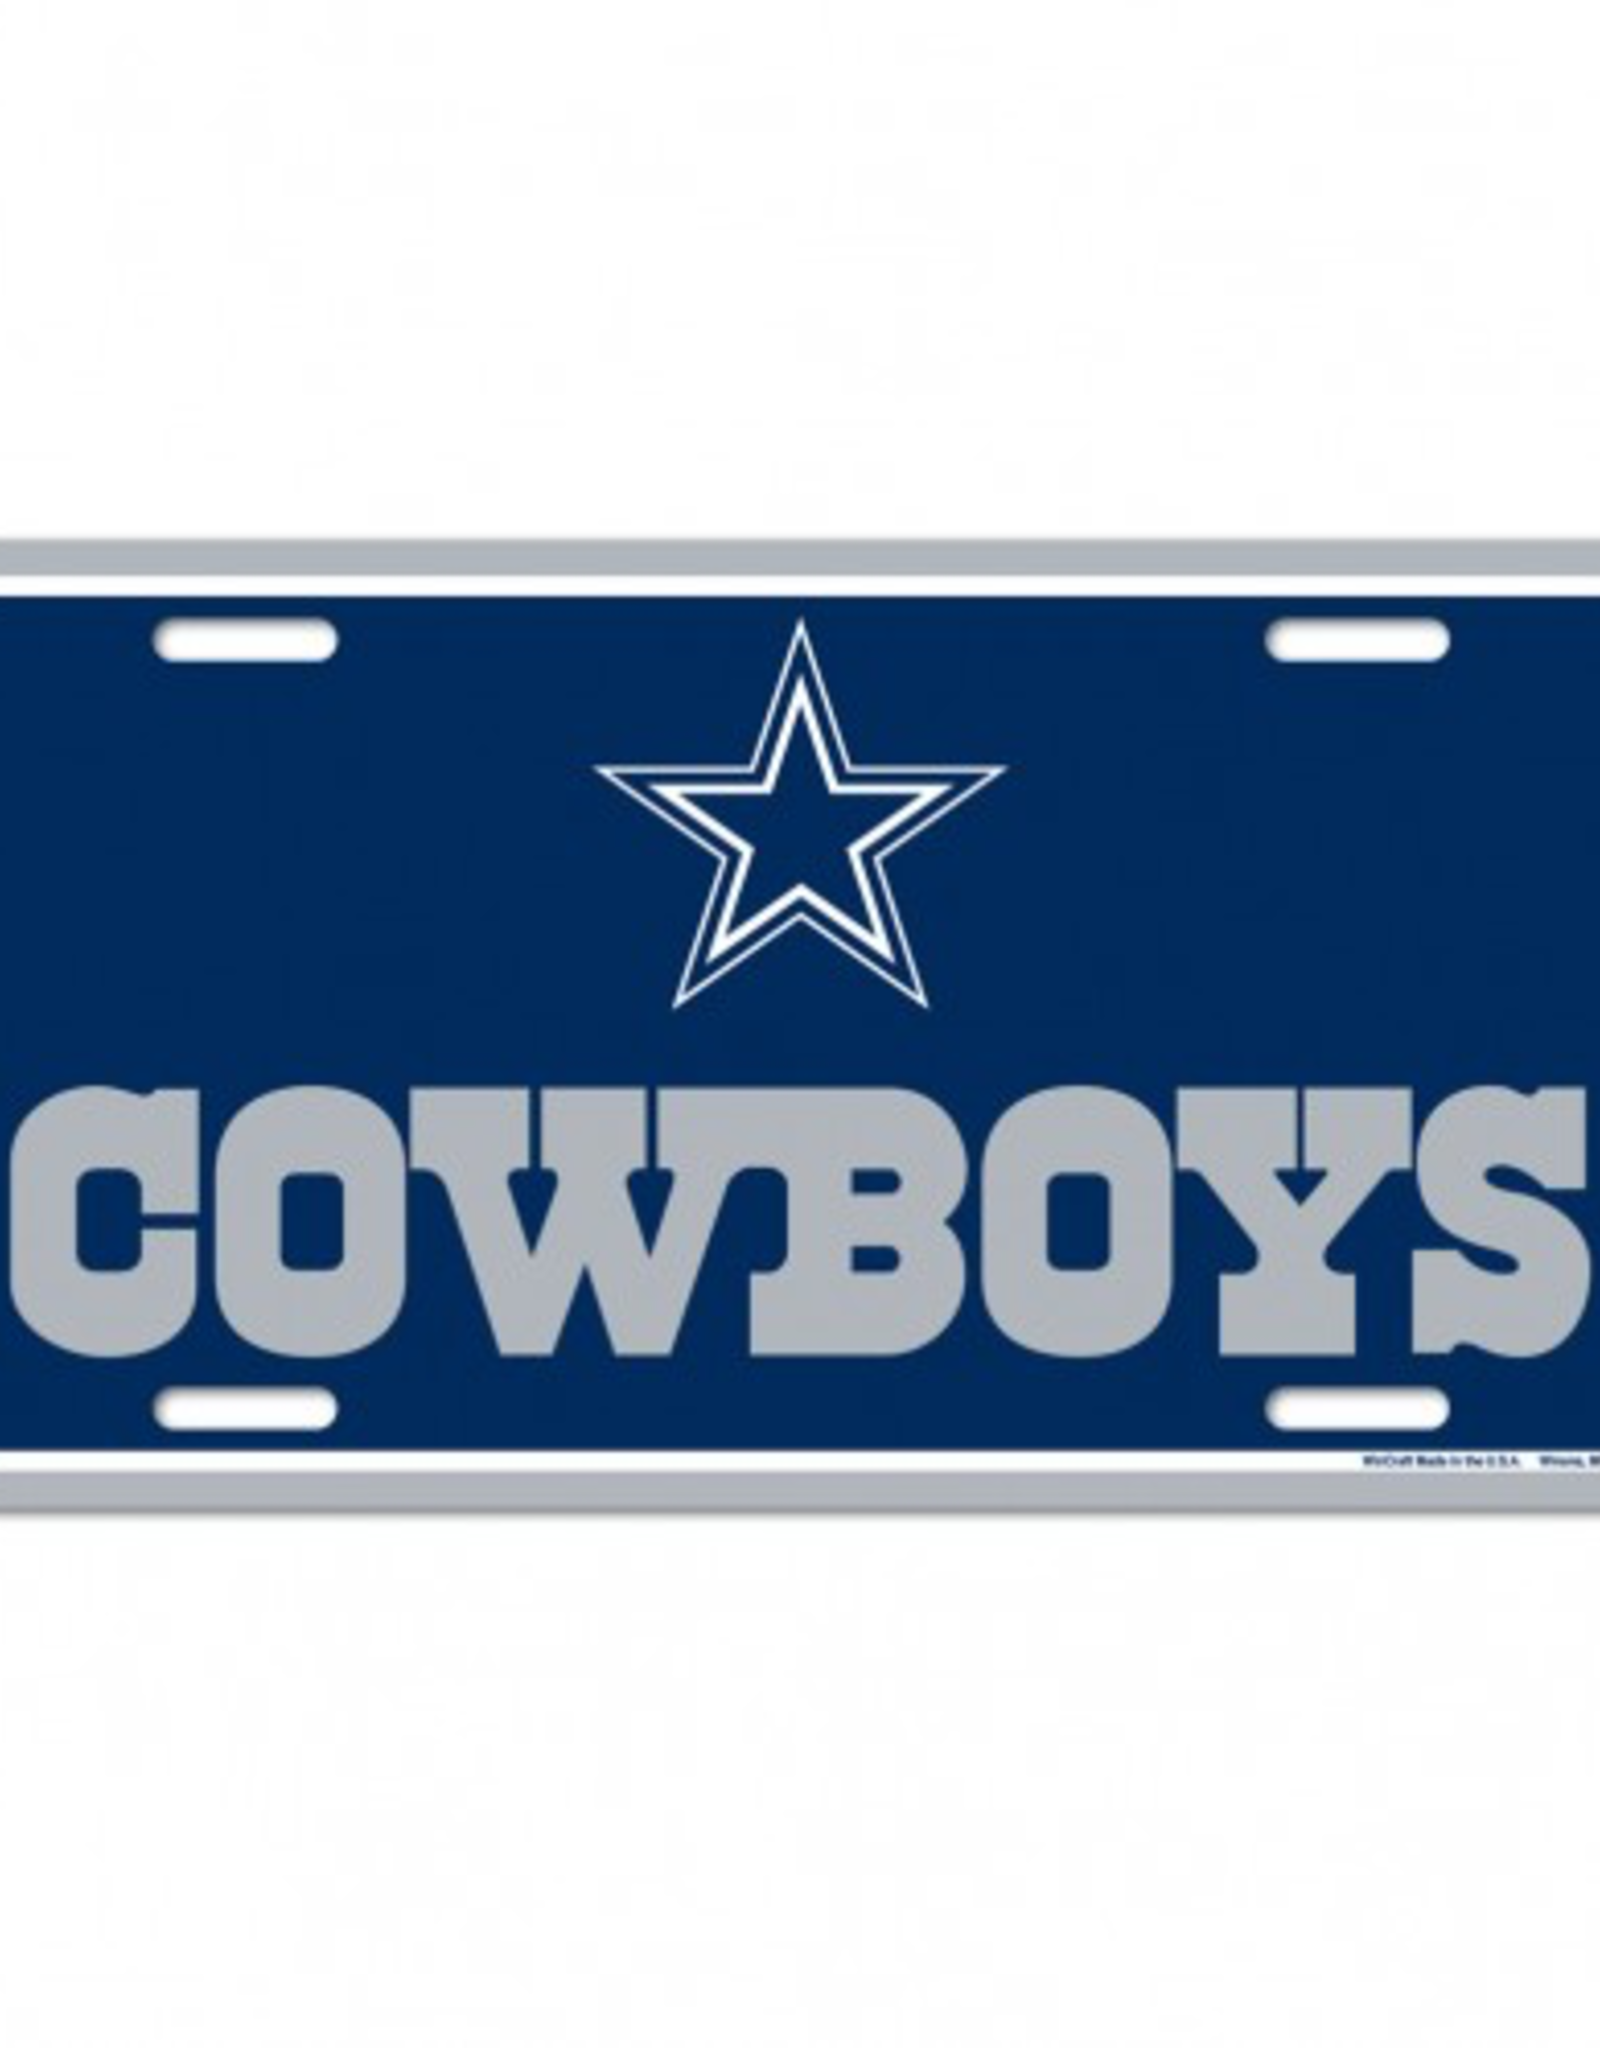 WINCRAFT Dallas Cowboys License Plate